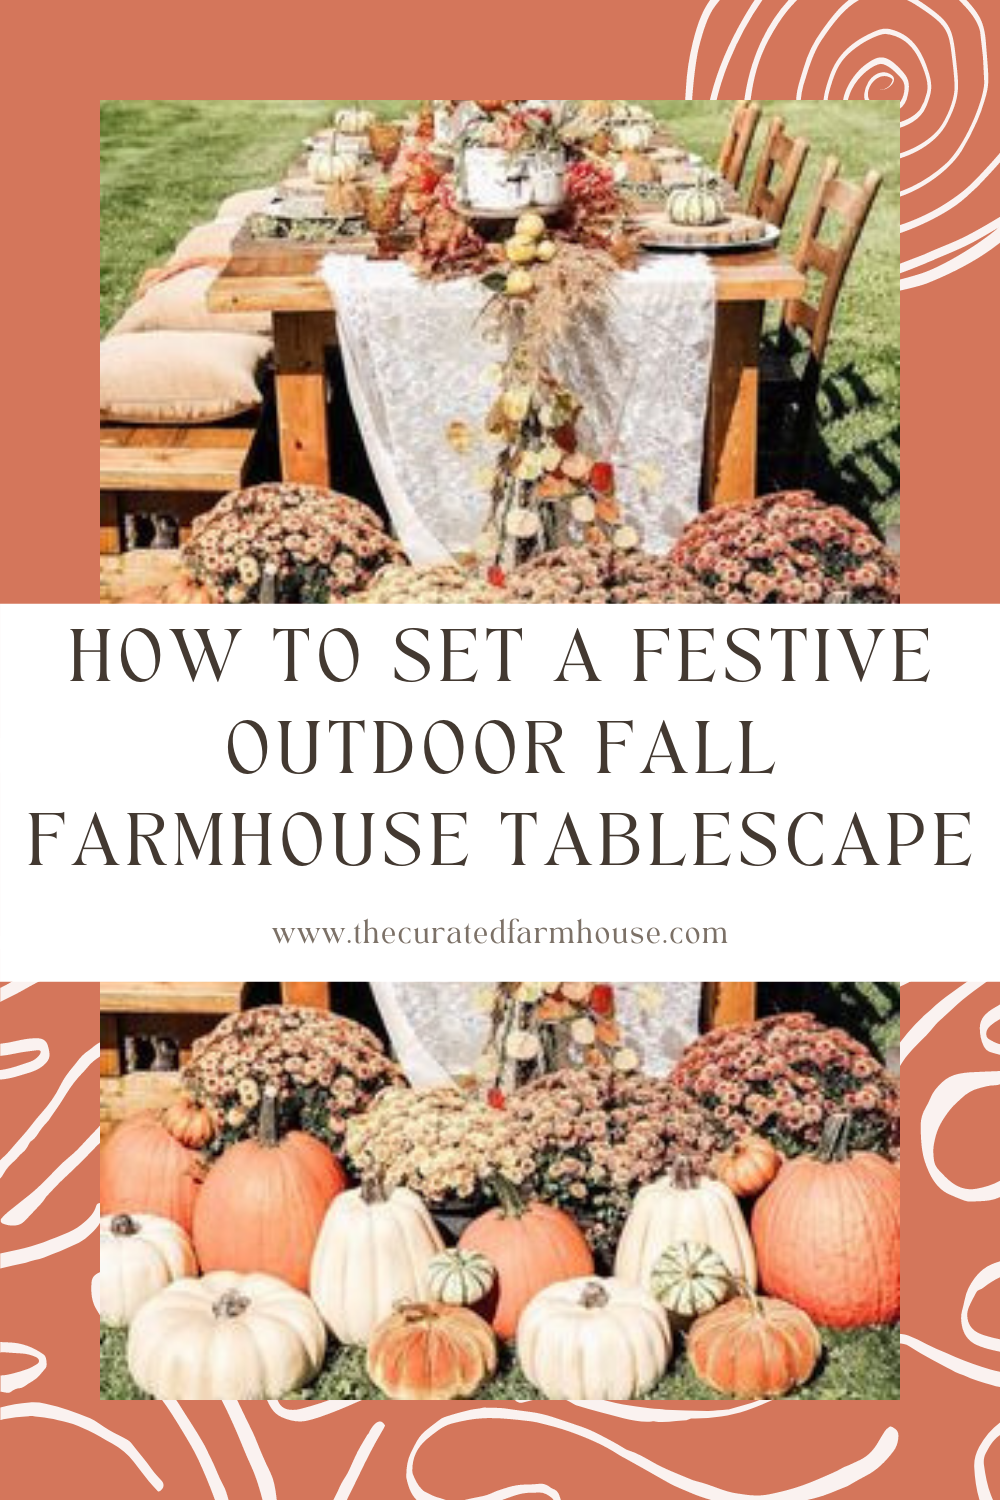 How To Set a Festive Outdoor Fall Farmhouse Tablescape